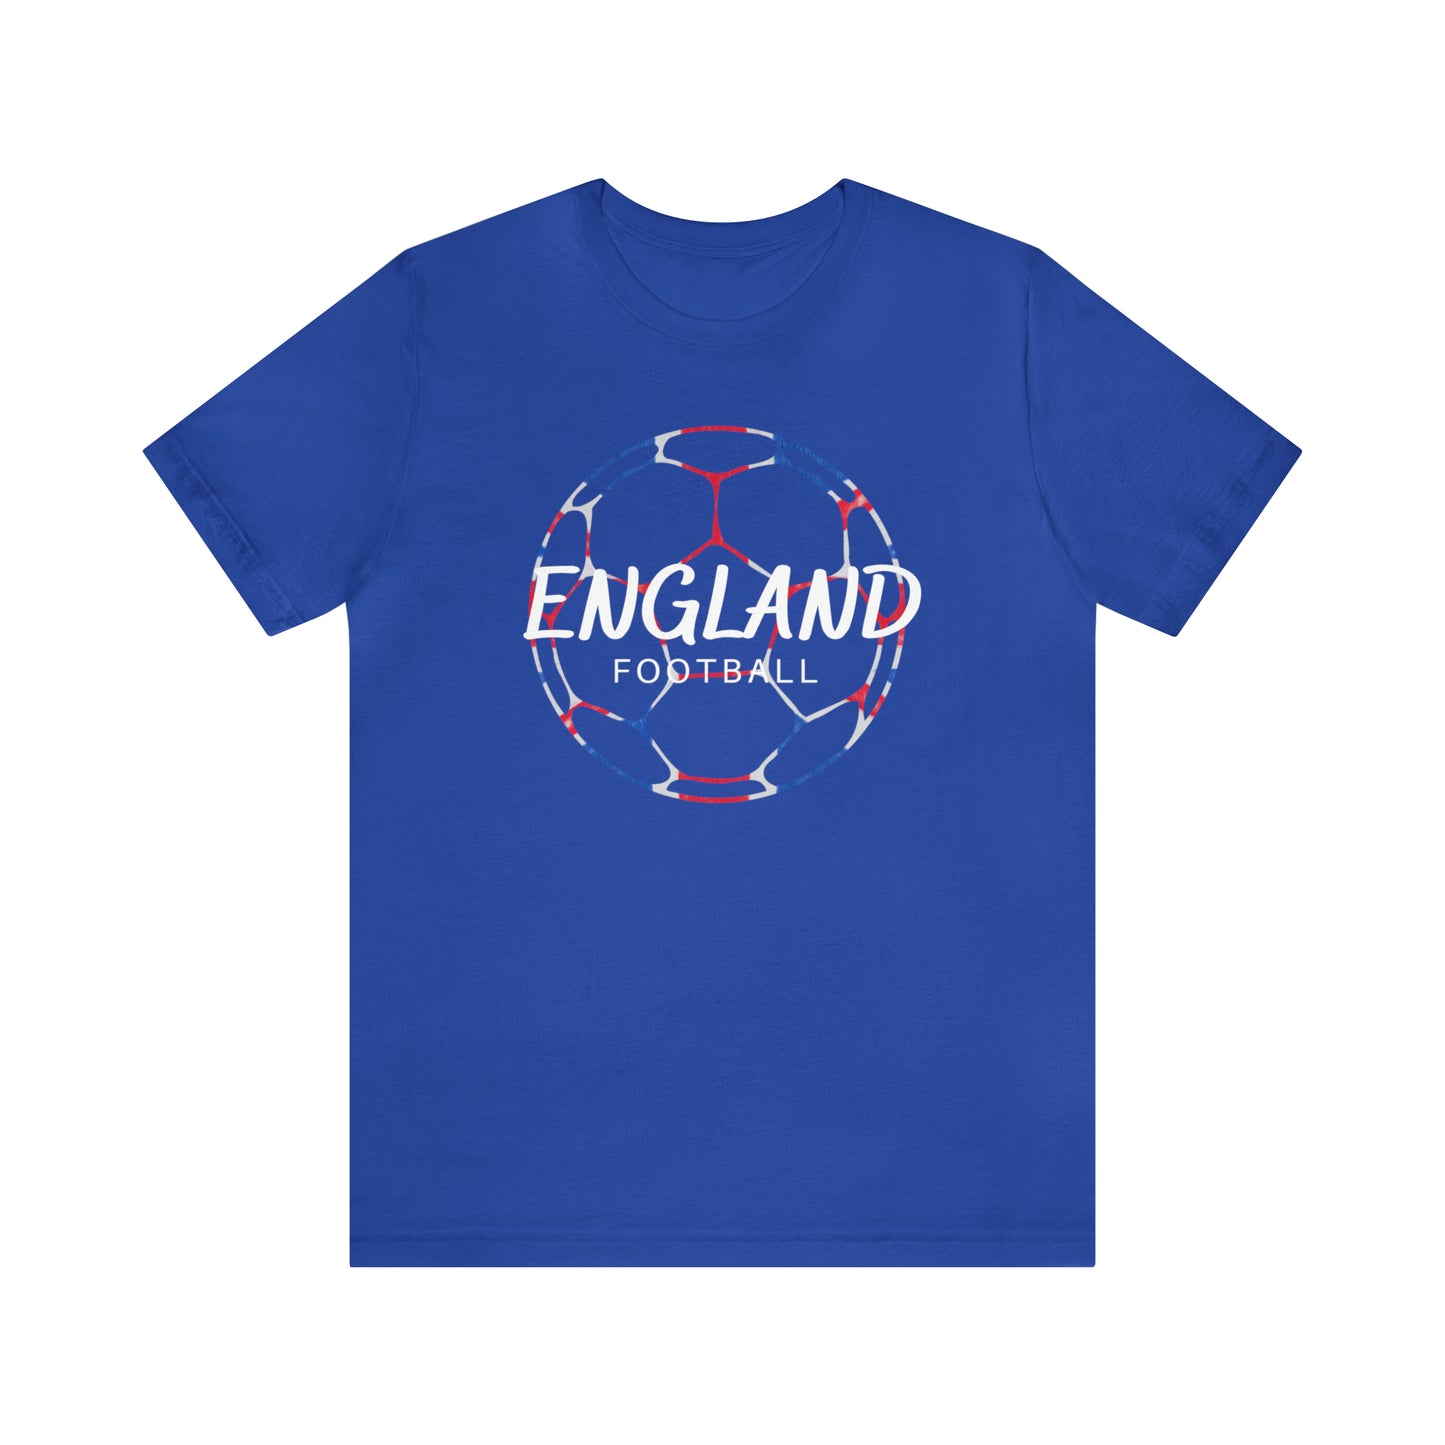 England Football Soccer T-Shirt, London England Shirt, World Cup Jersey T-Shirt, Women Football Sport Tshirt, England Travel Gift